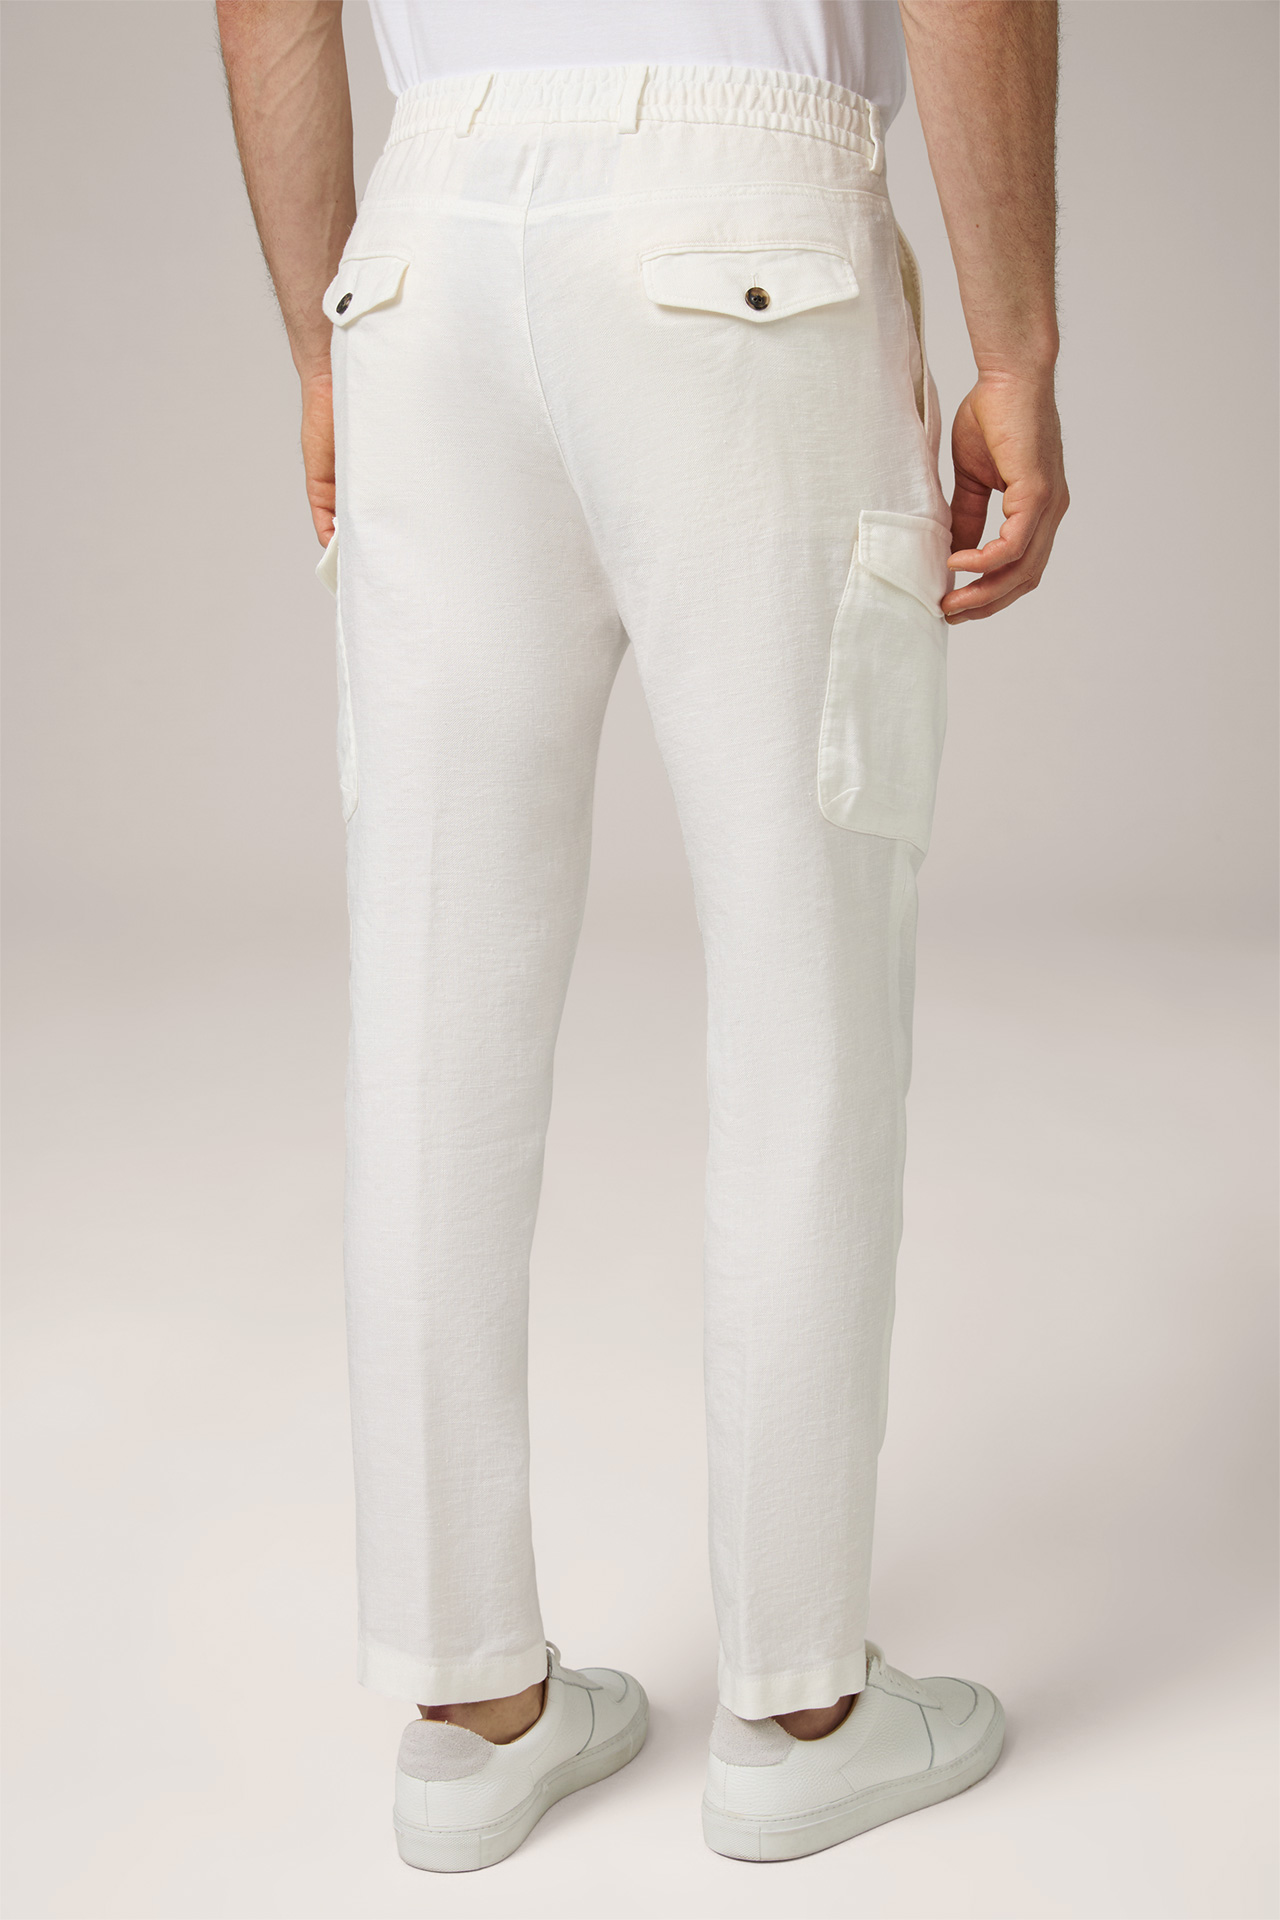 Famo Modular Pleated Cargo Pants in an Off-White Linen Blend